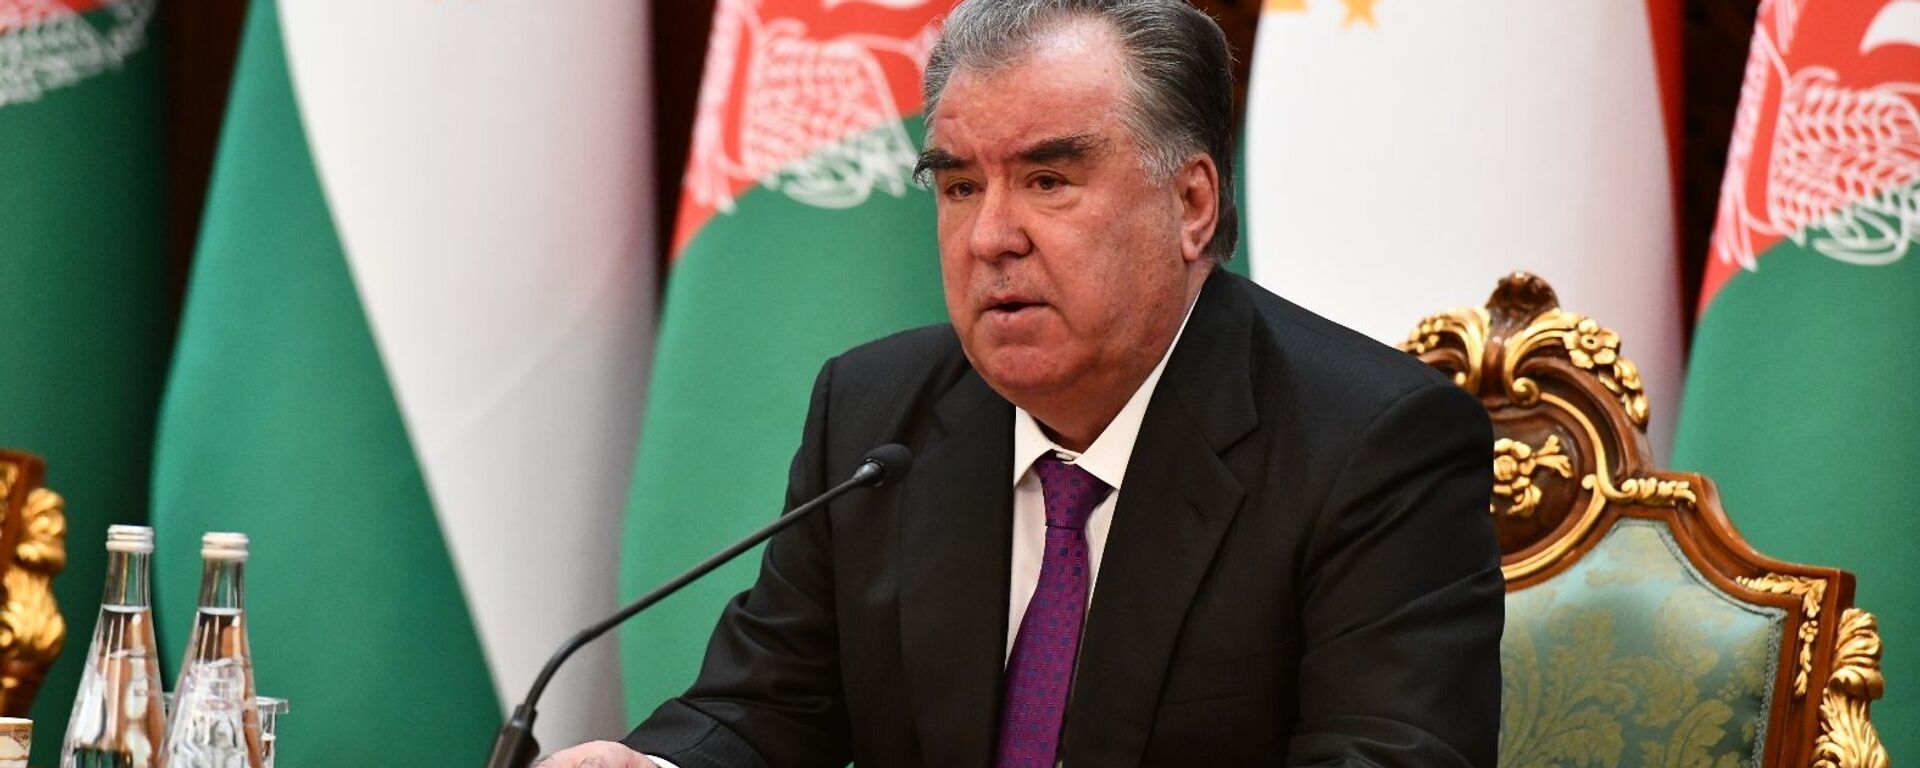 Президент Таджикистана Эмомали Рахмон - Sputnik Кыргызстан, 1920, 01.04.2021